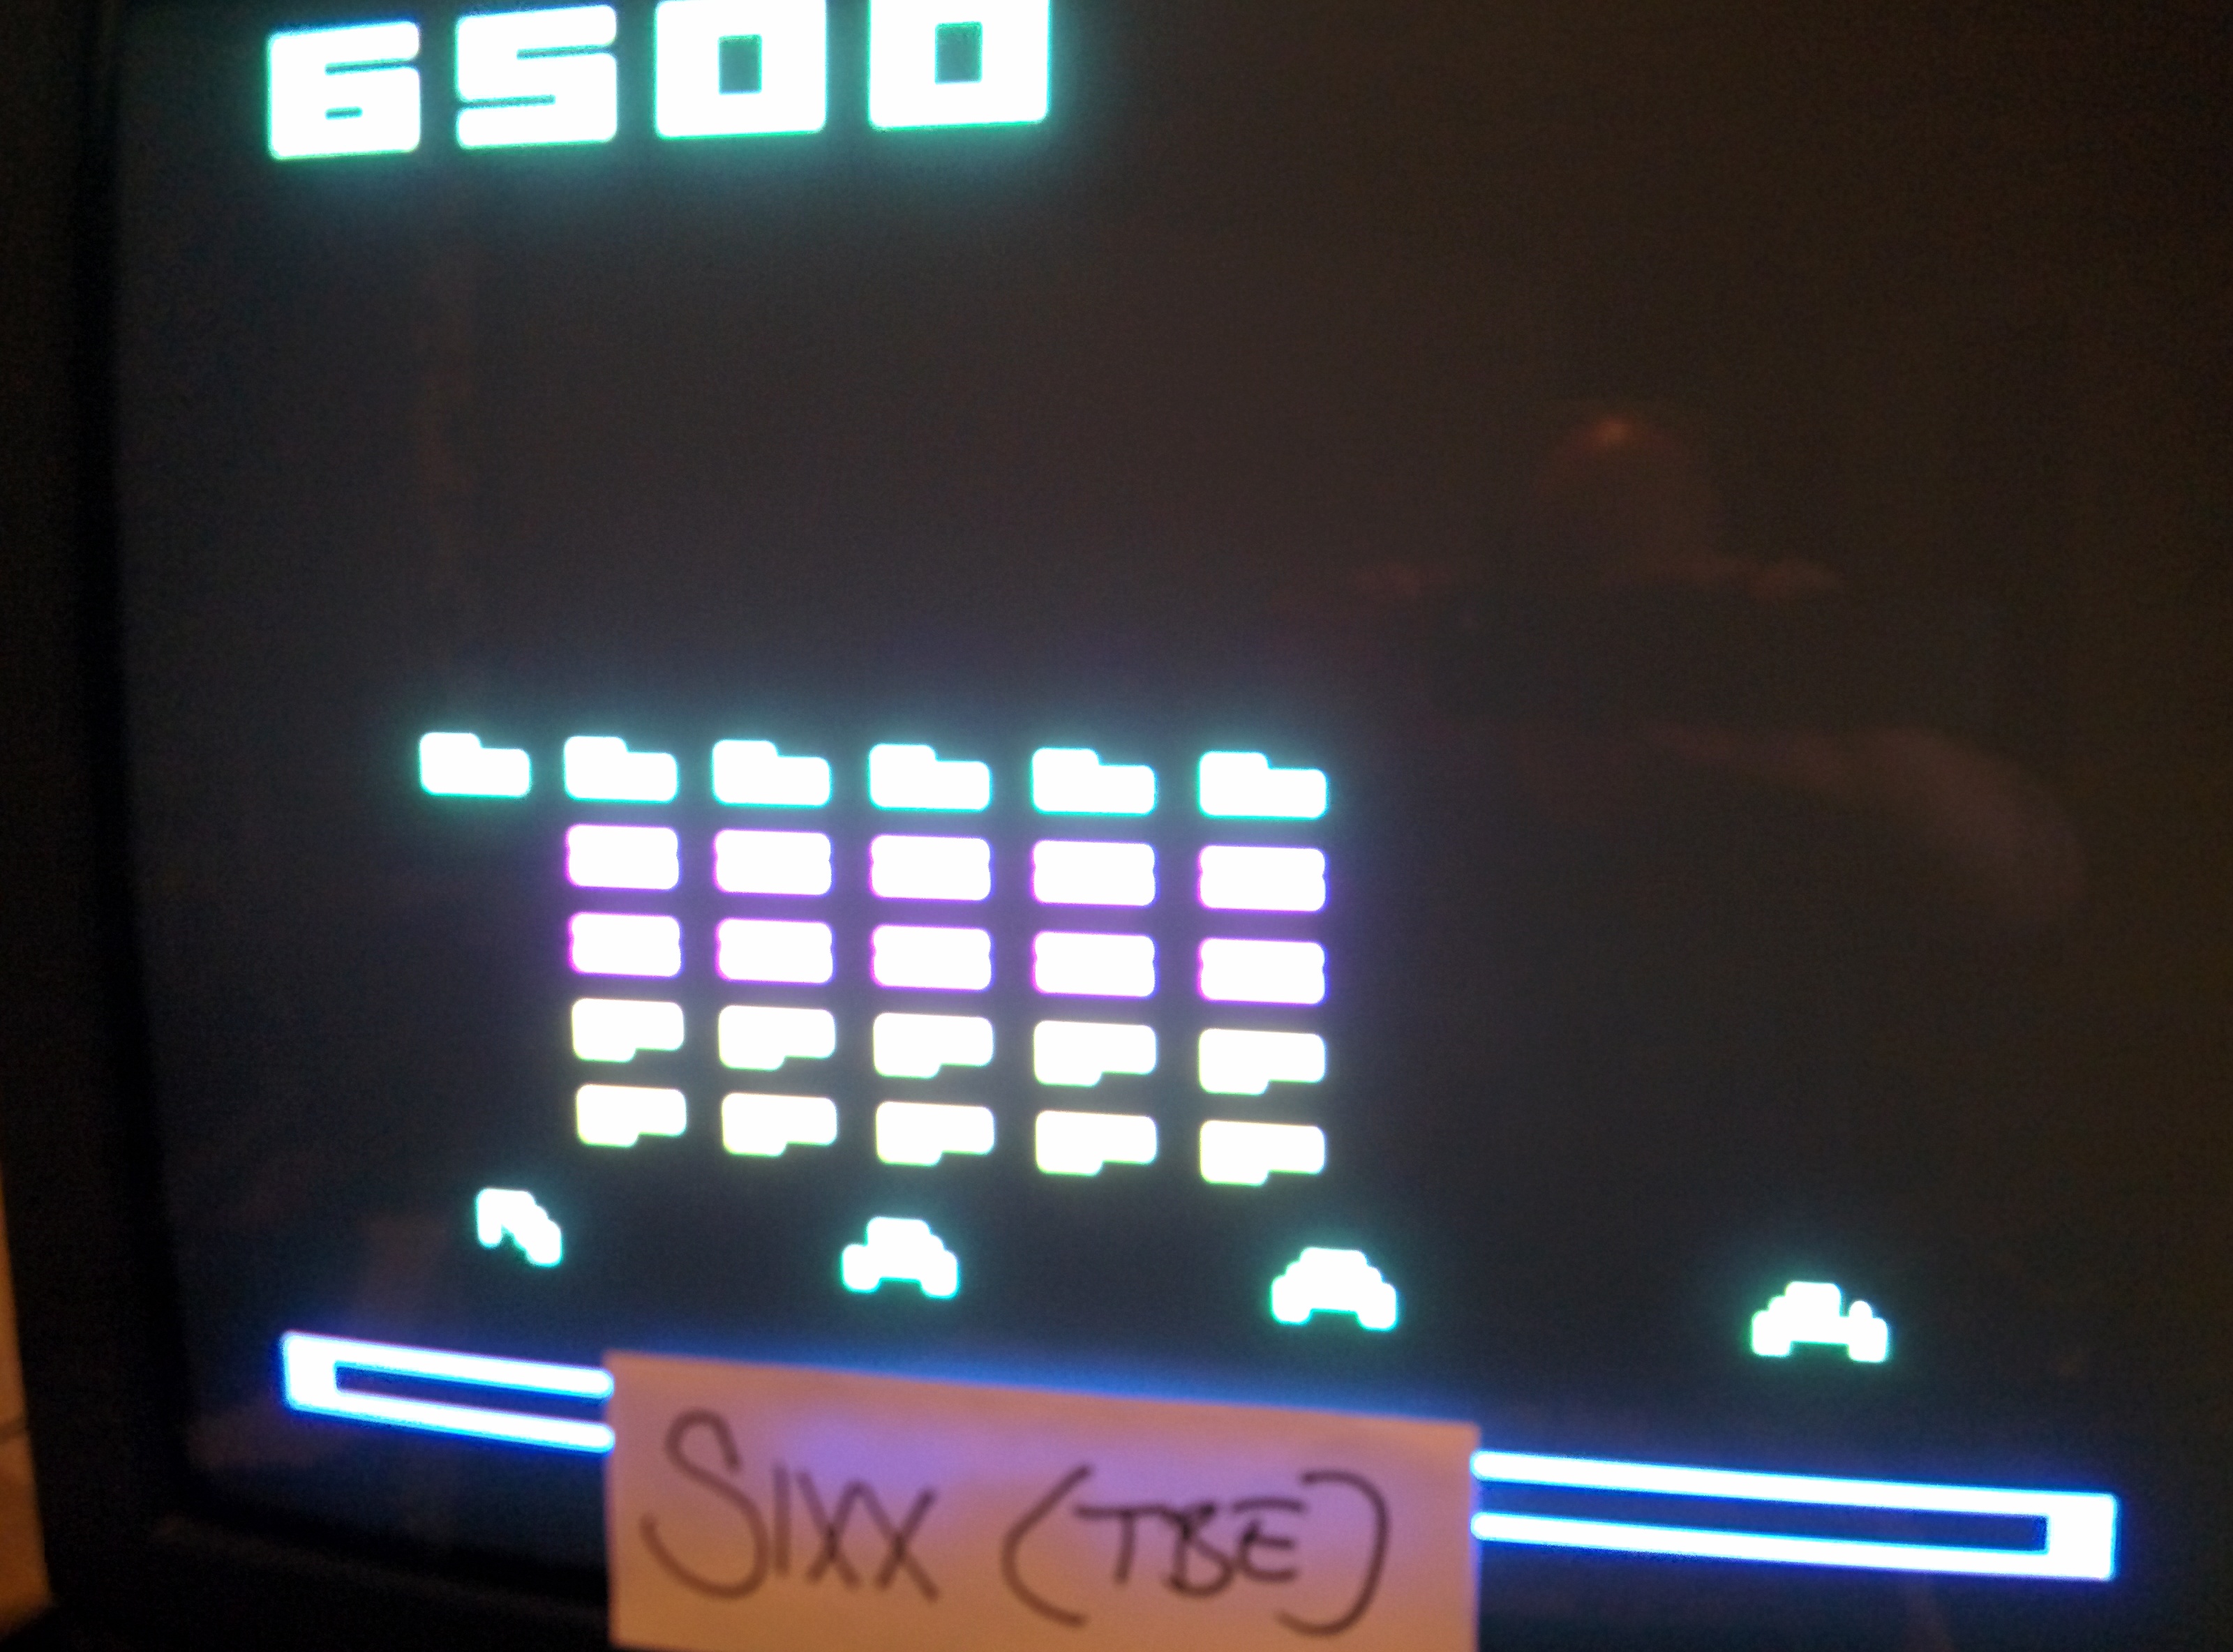 Sixx: Inv+ (Atari 2600 Emulated Novice/B Mode) 6,500 points on 2014-06-19 17:26:39